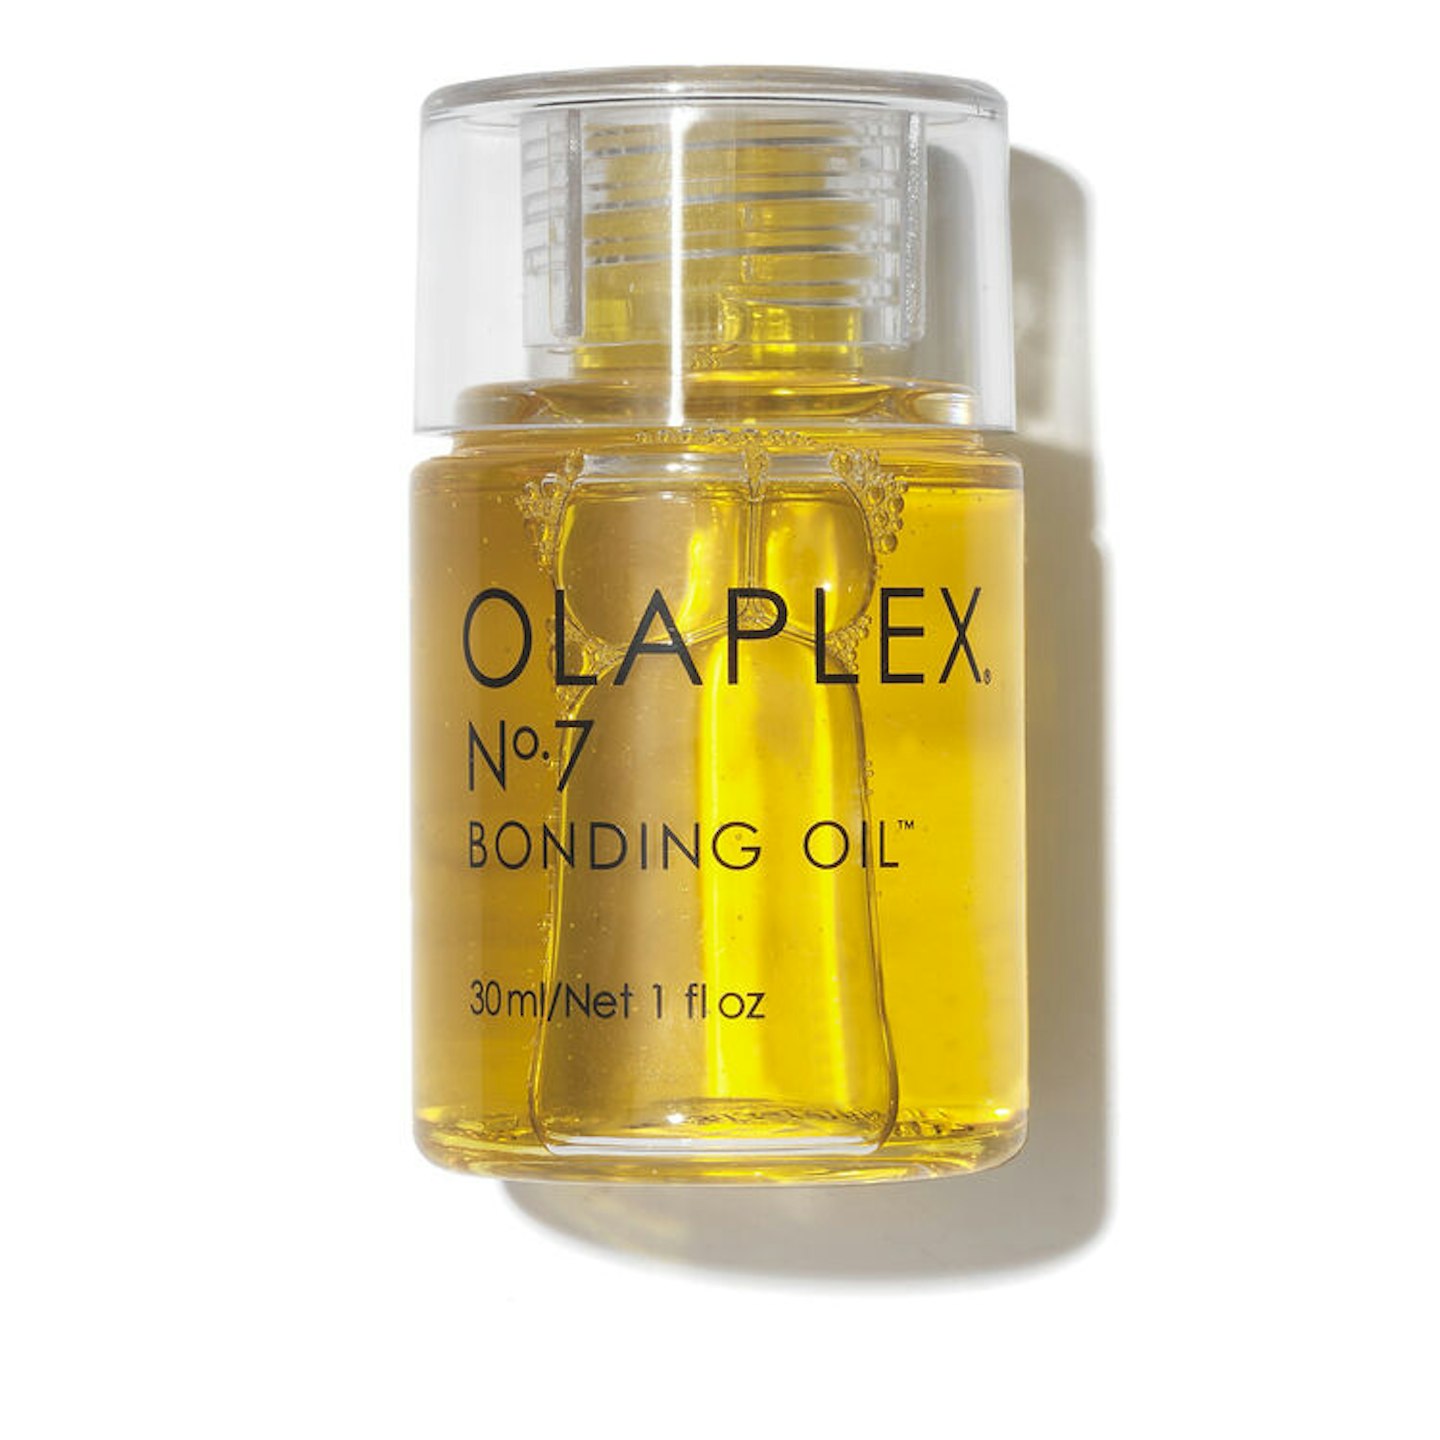 Olaplex No.7 Bonding Oil, £26